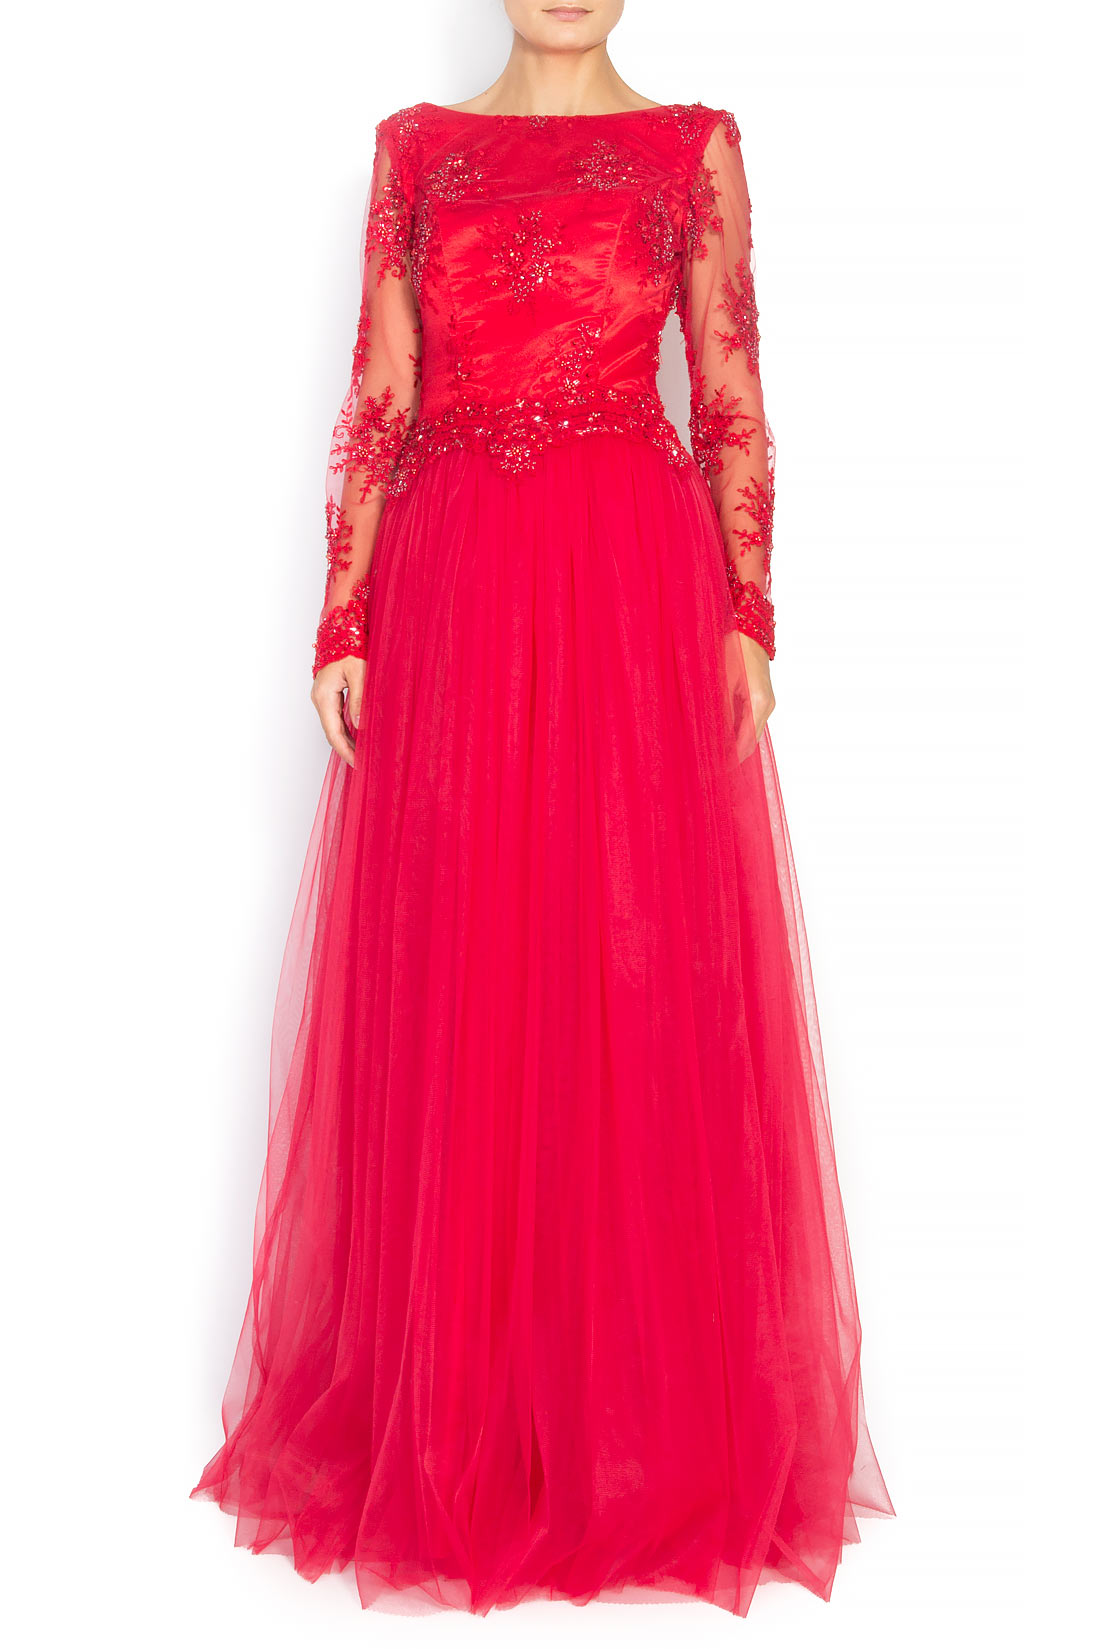 'Ruby Red' tulle and lace maxi dress Raffaela Moraru image 0